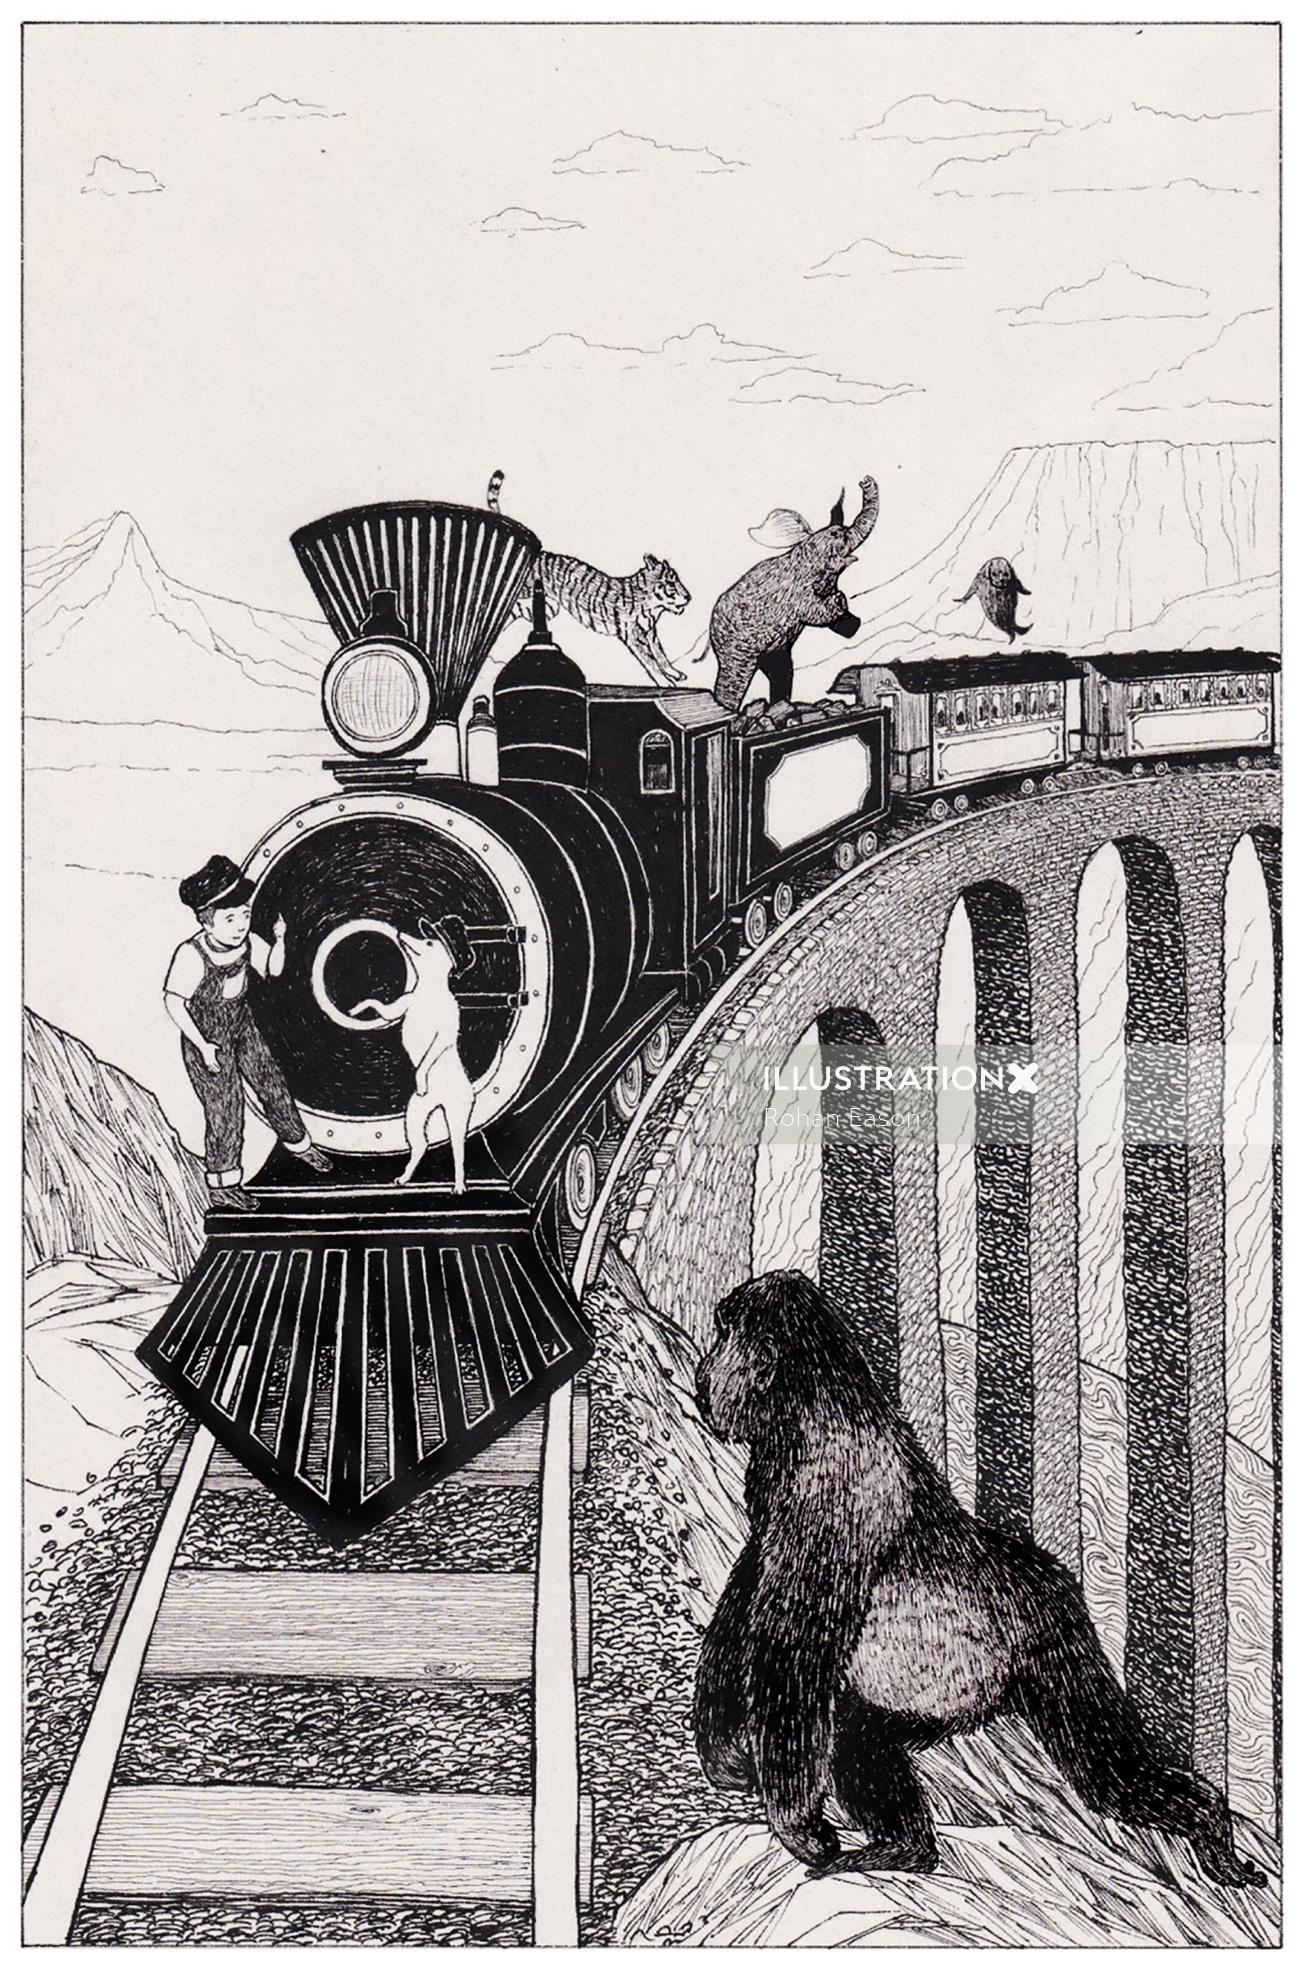 RohanEasonによる移動中の電車で遊ぶ子供と動物